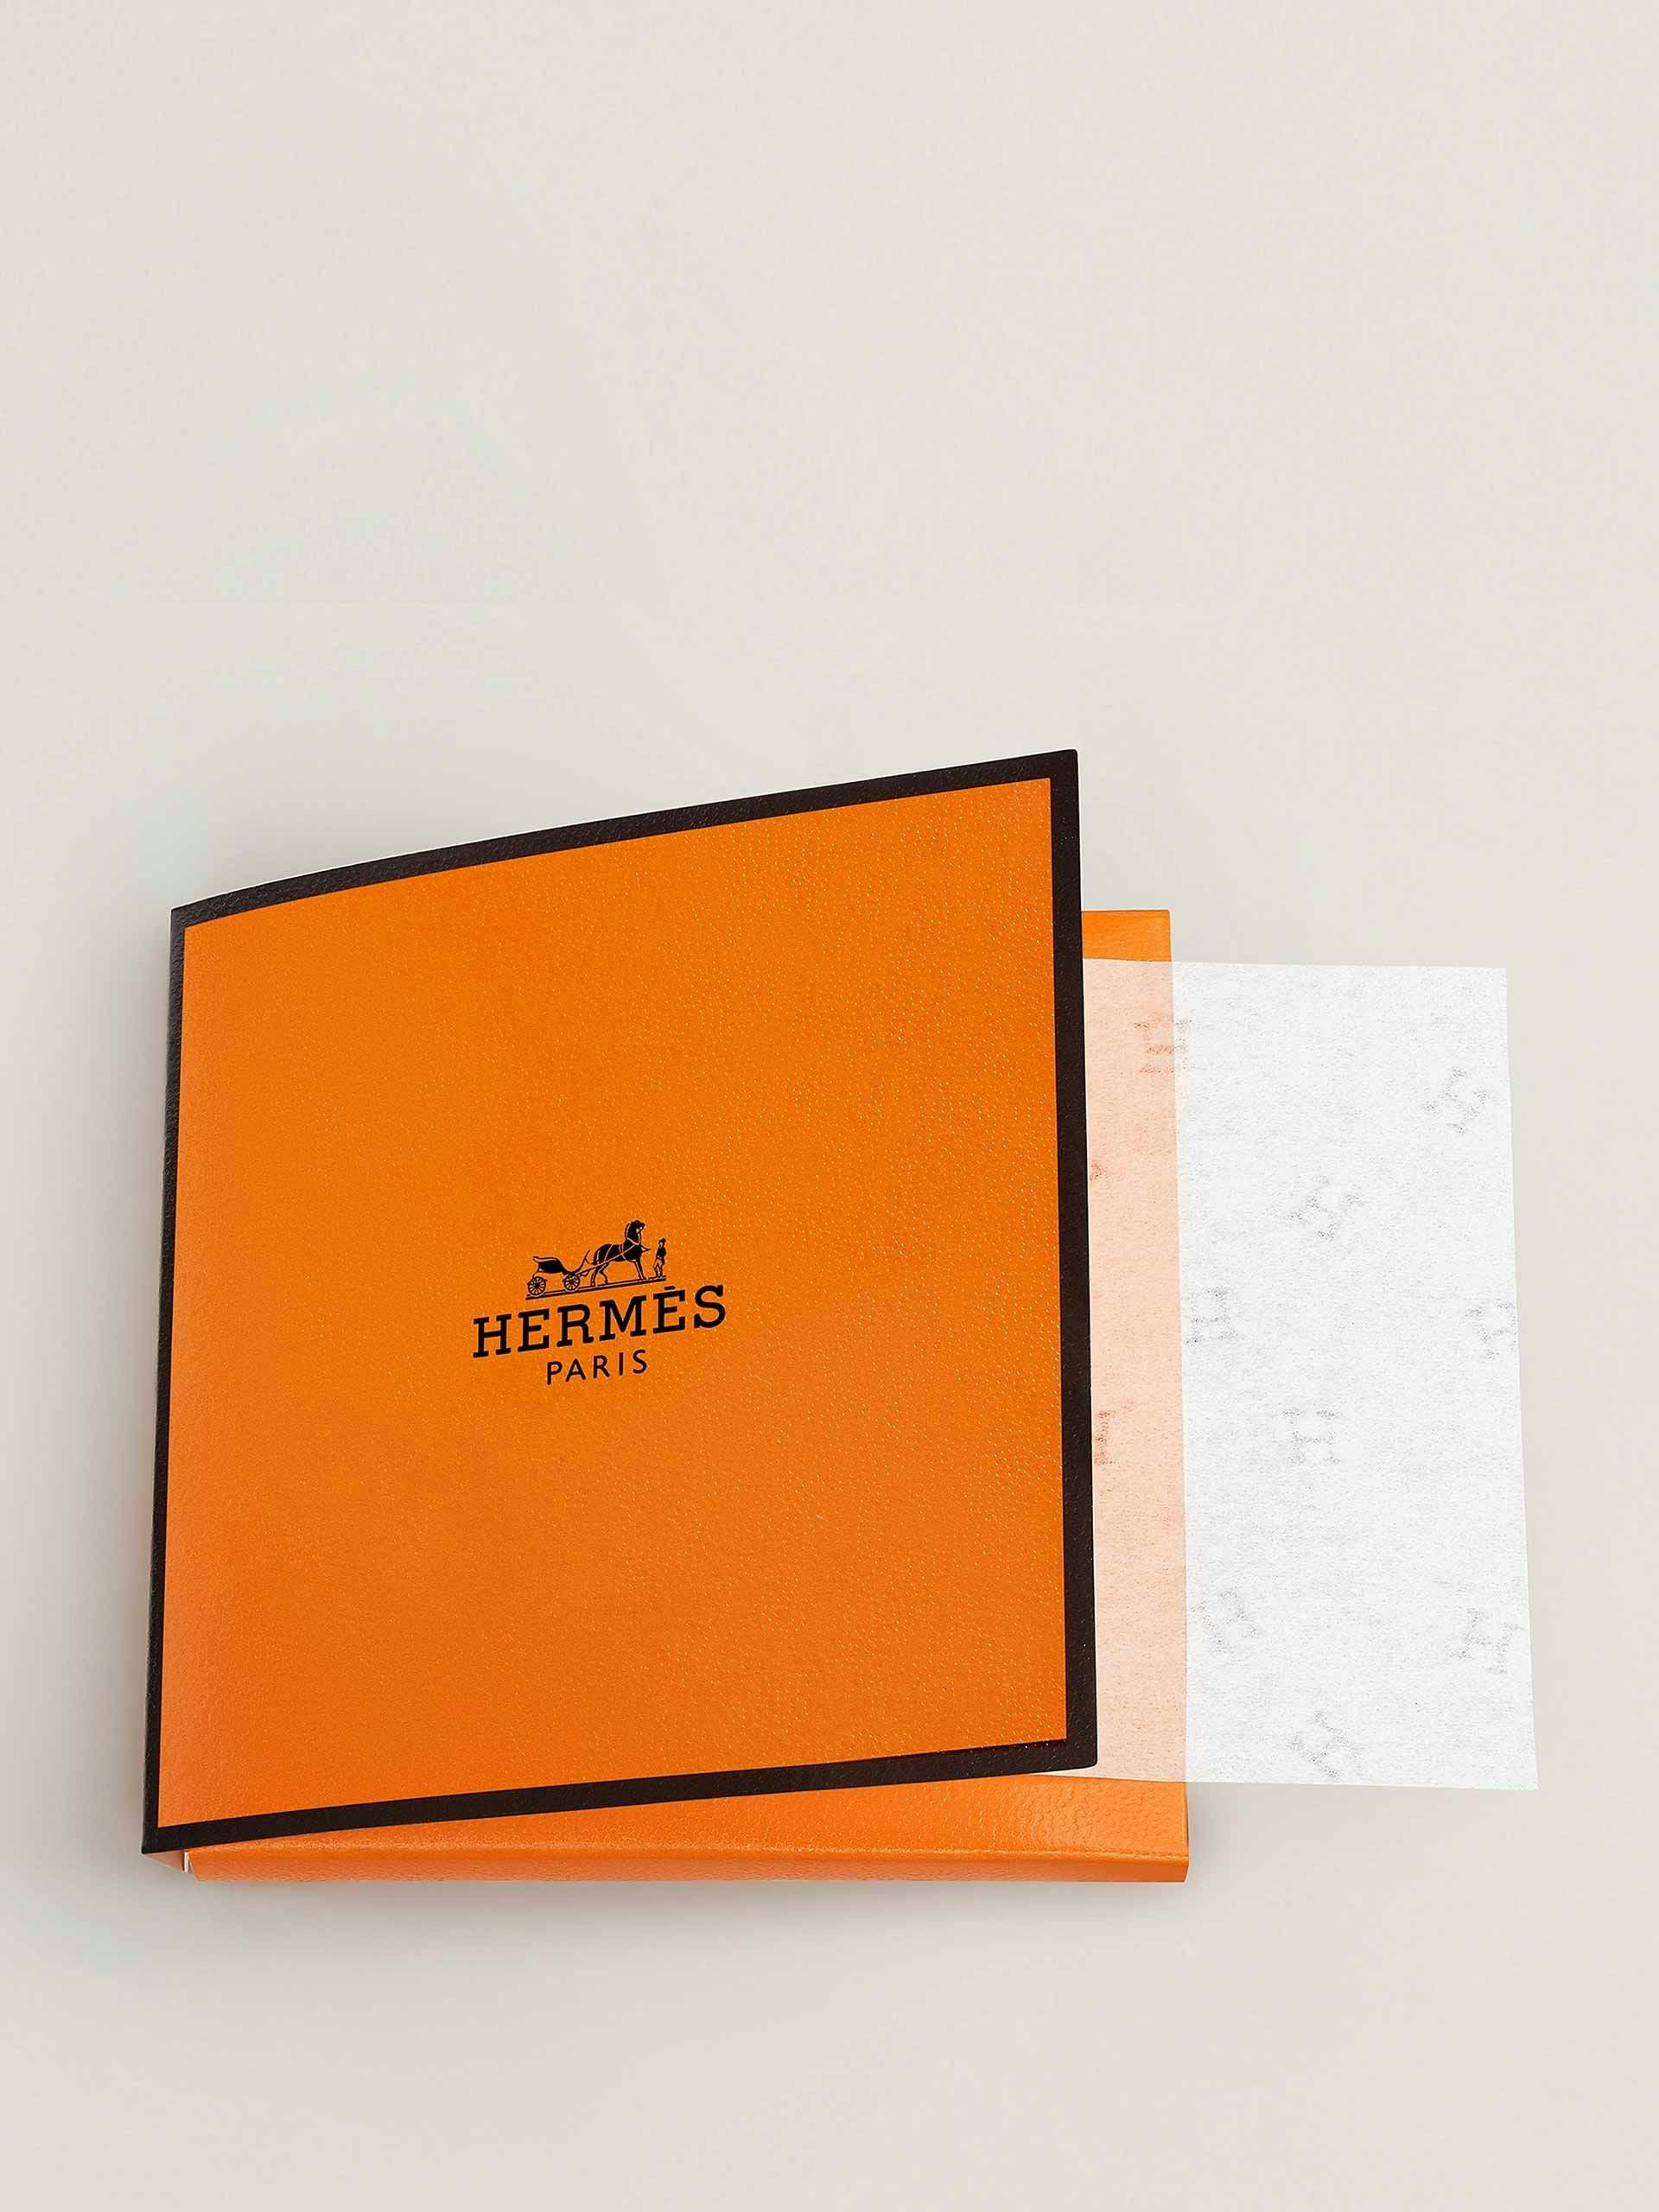 Hermès Plein Air, blotting papers